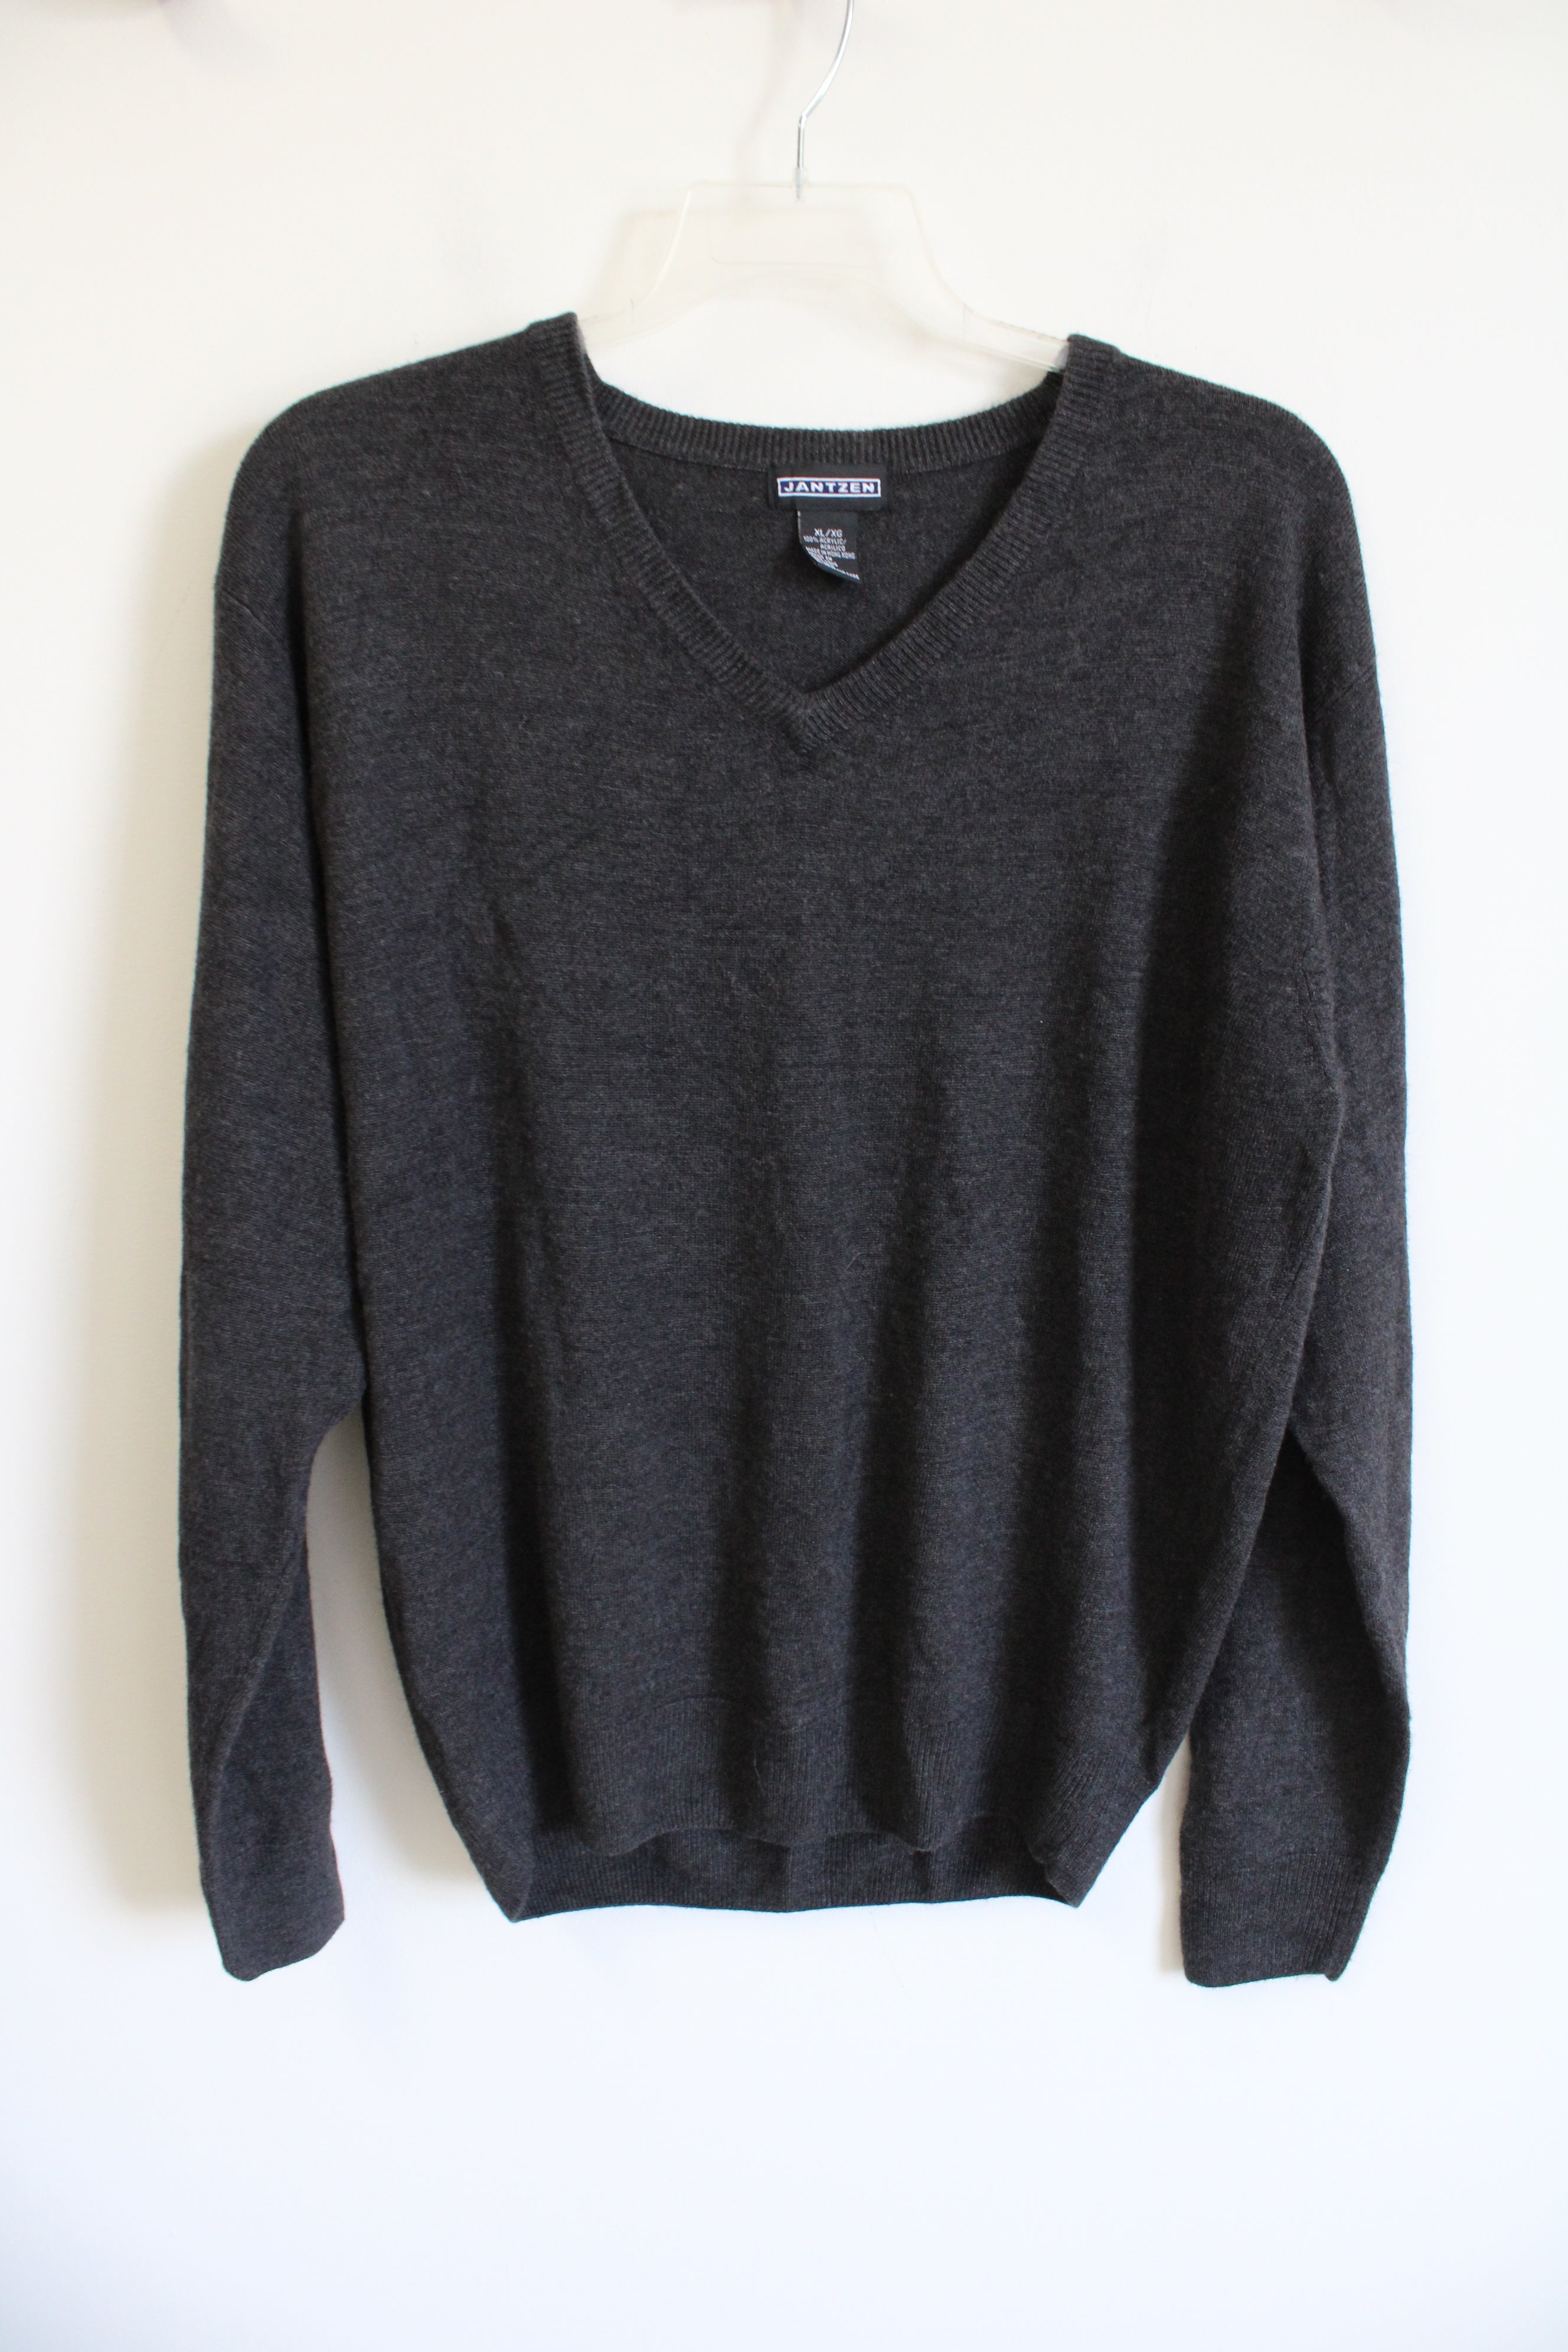 Jantzen Gray Knit Sweater | XL